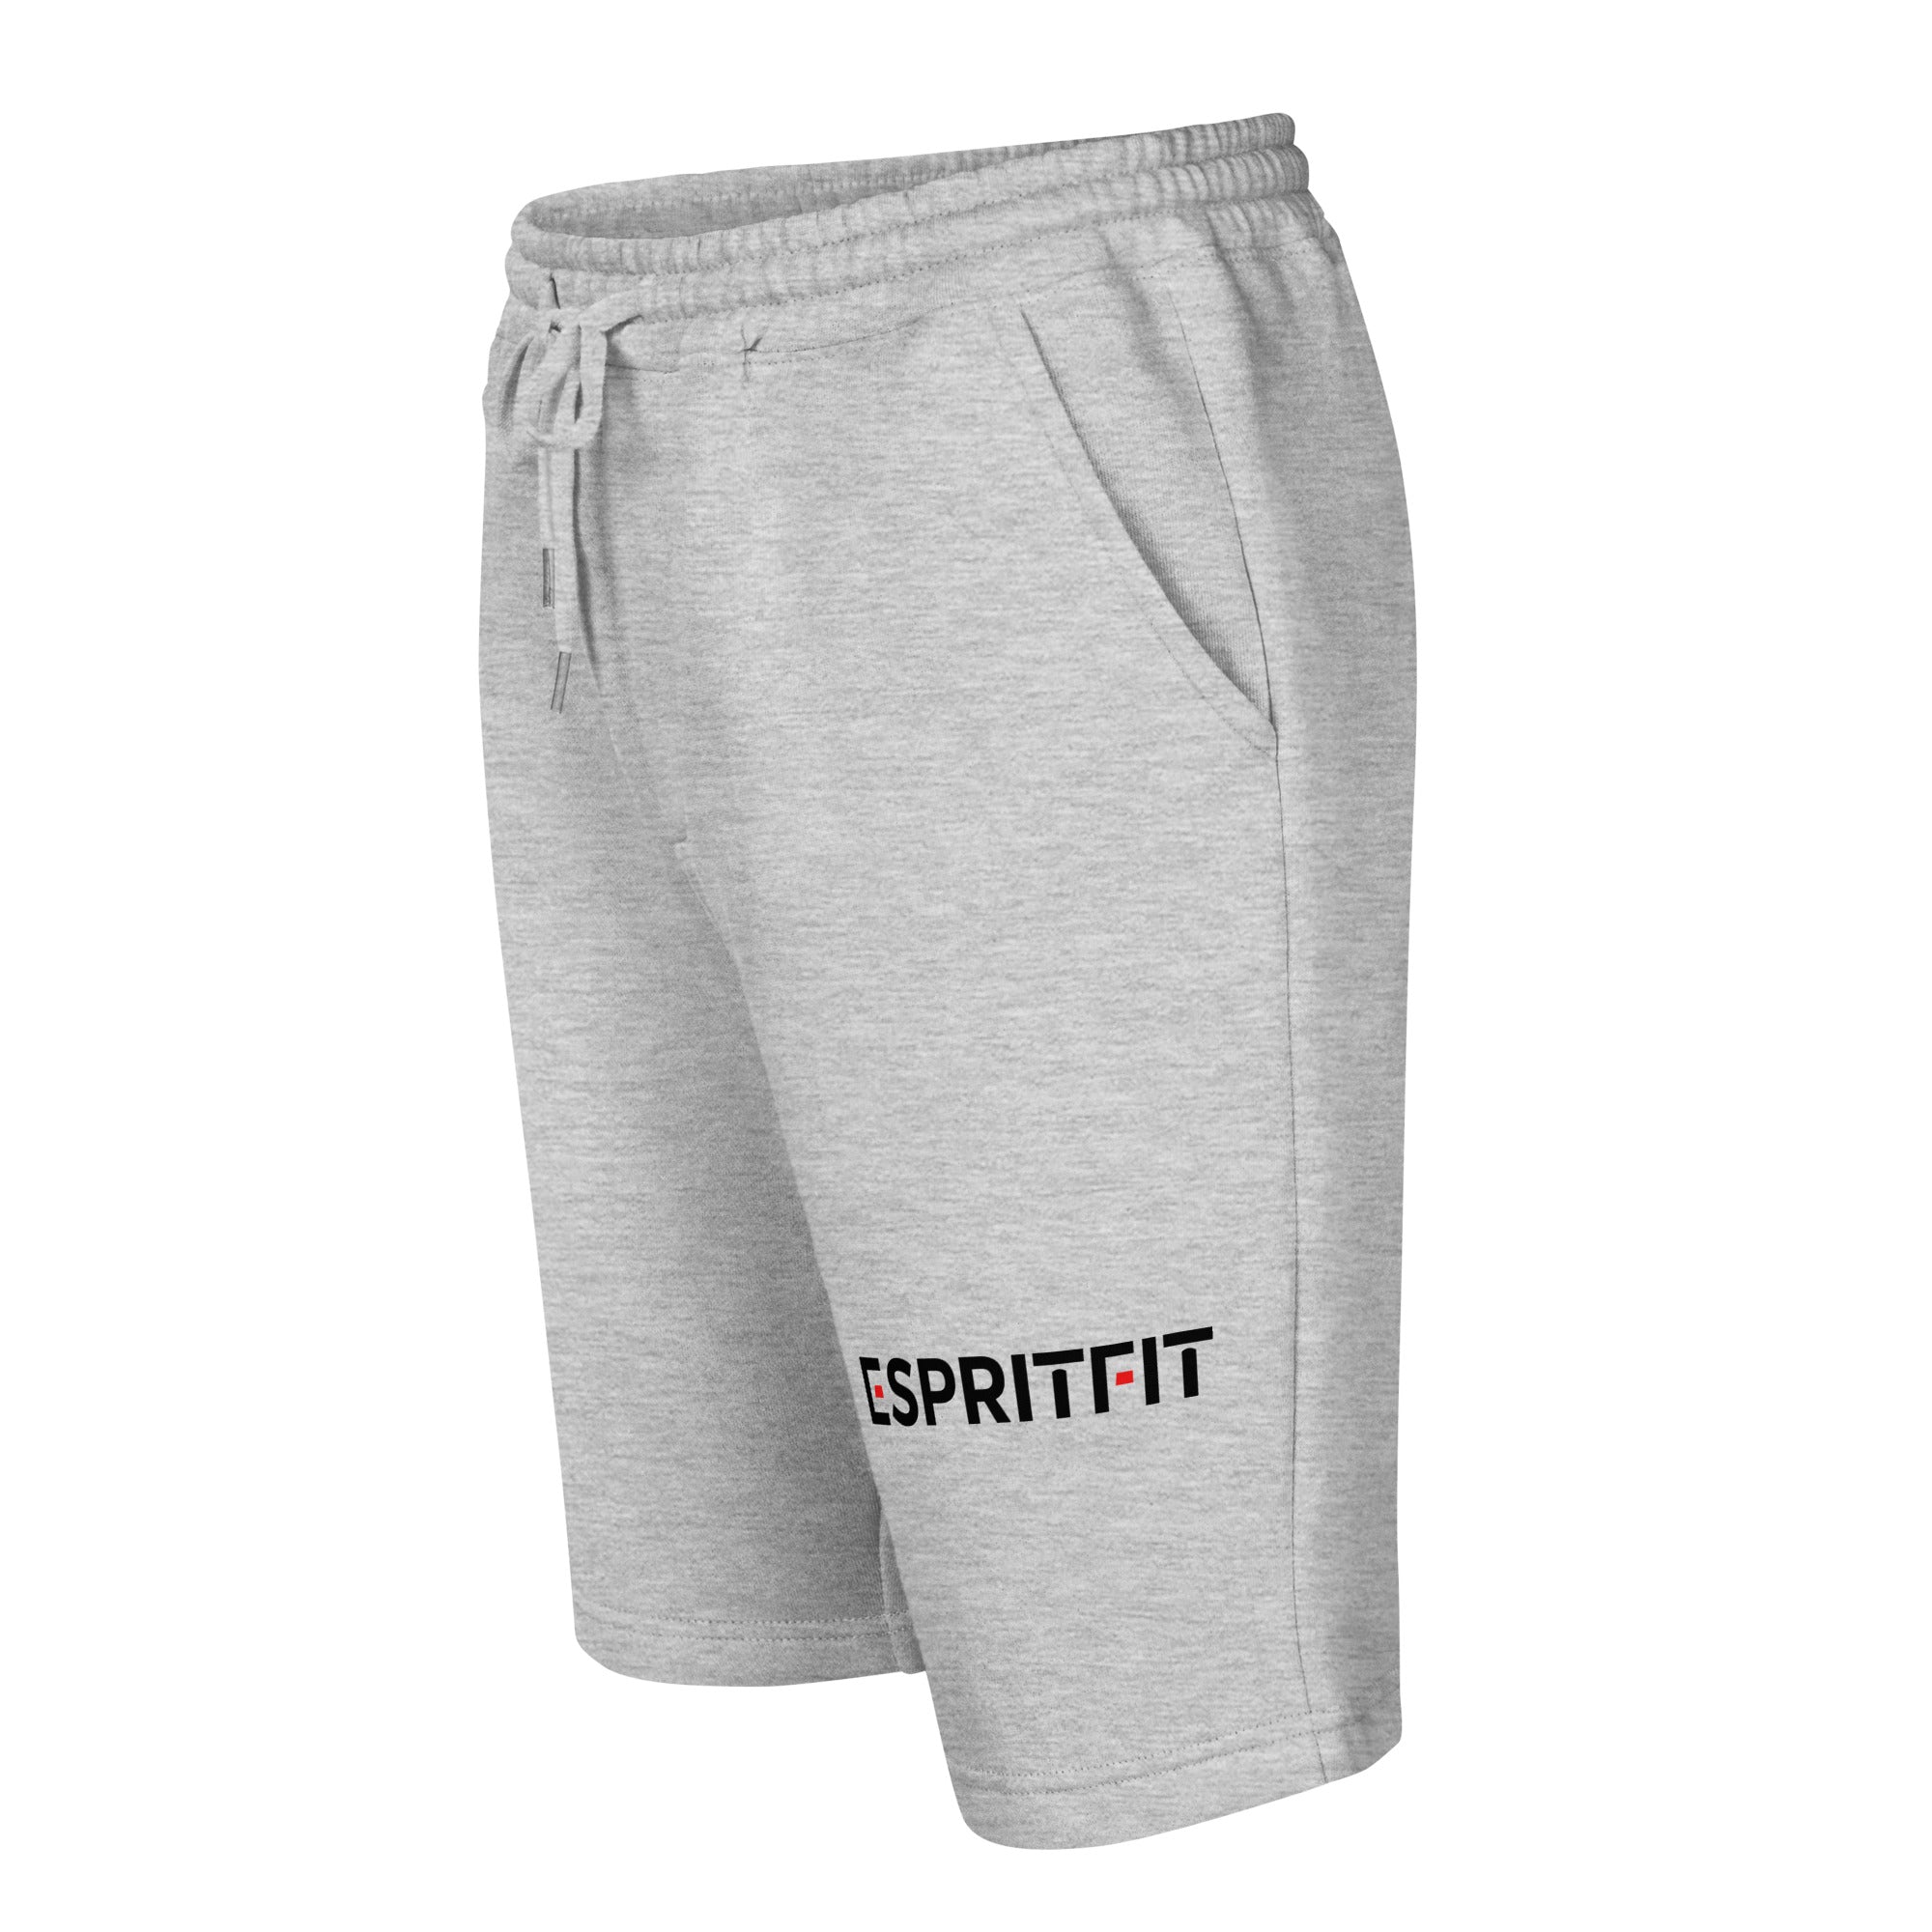 Espritfit SportLuxe Fleece Shorts - Espritfit